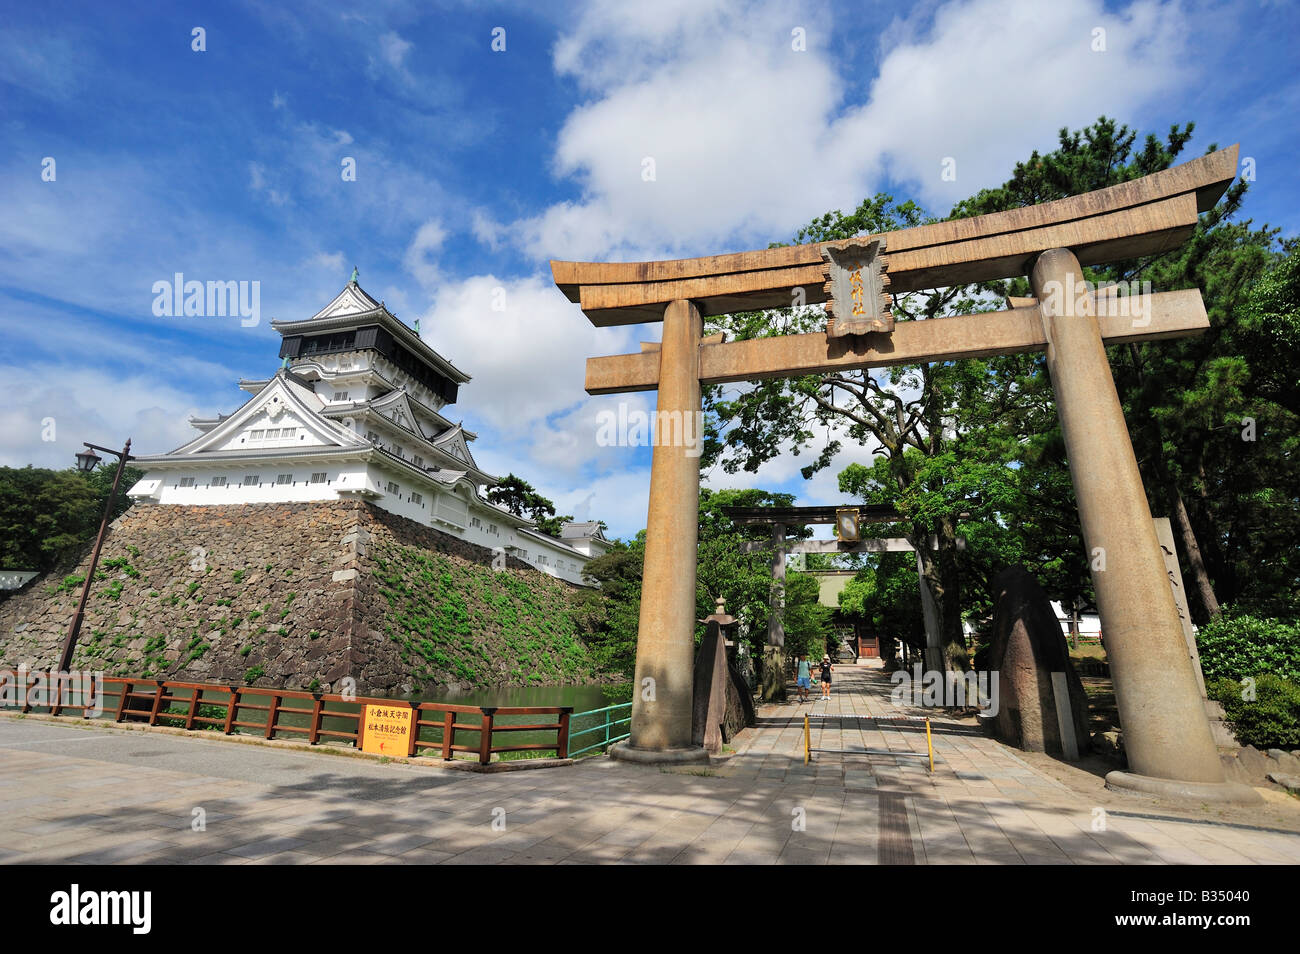 Kokura hi-res stock photography and images - Alamy